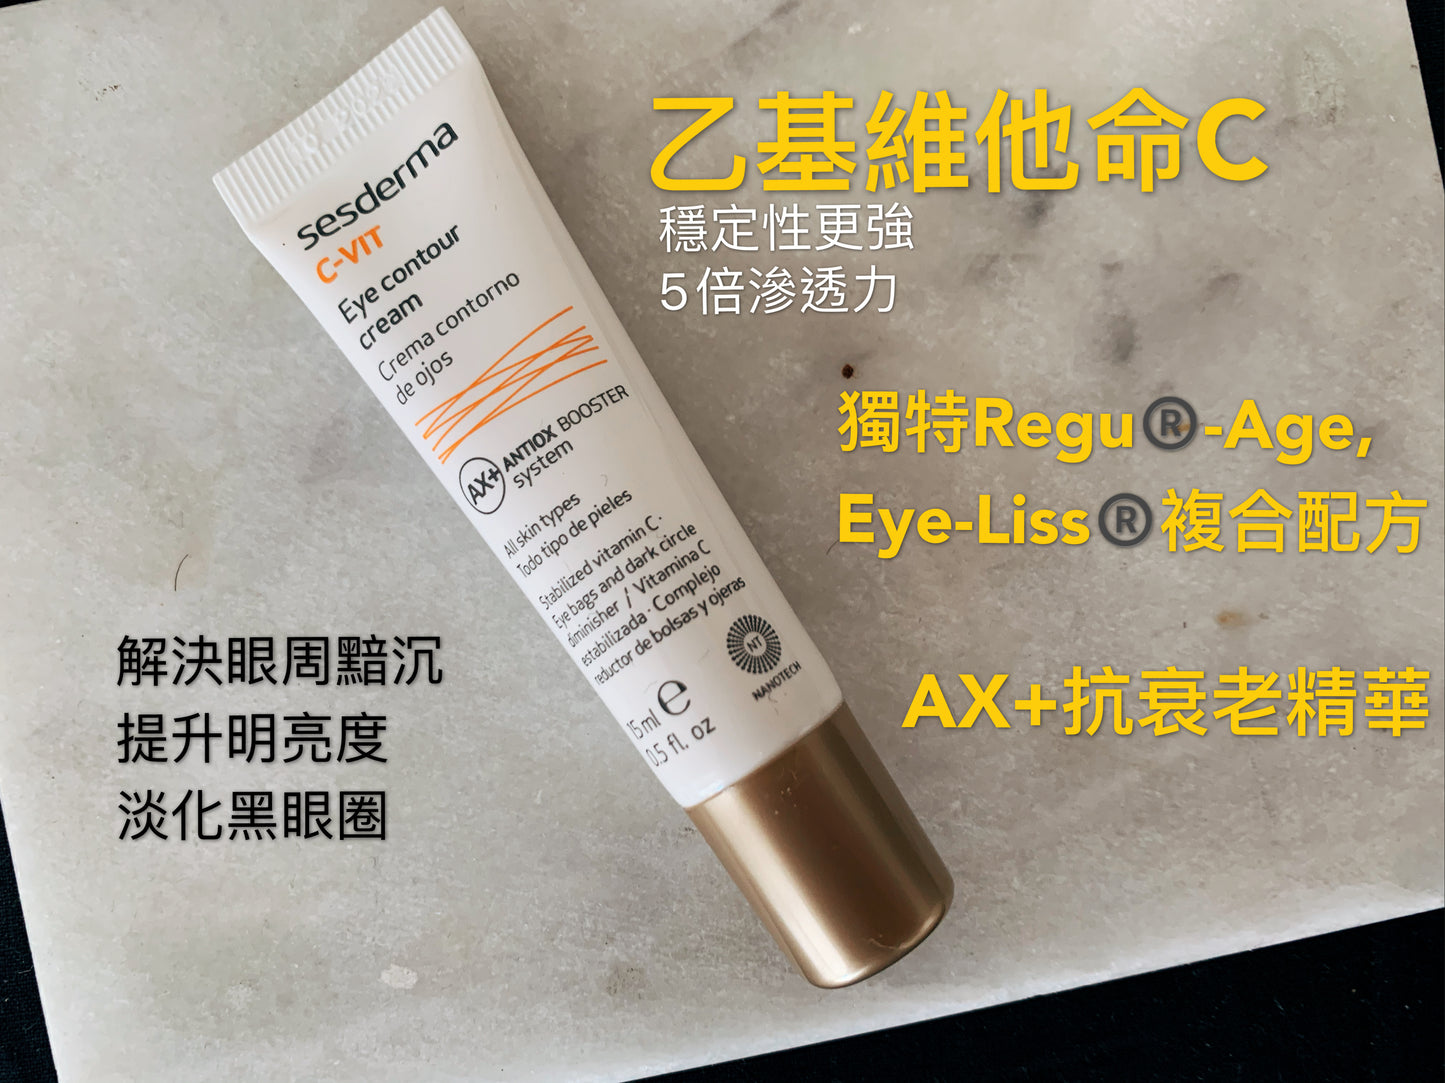 西班牙Sesderma C-vit eye contour cream 維C亮白眼霜 15ml - buy European skincare in Hong Kong - 1click2beauty